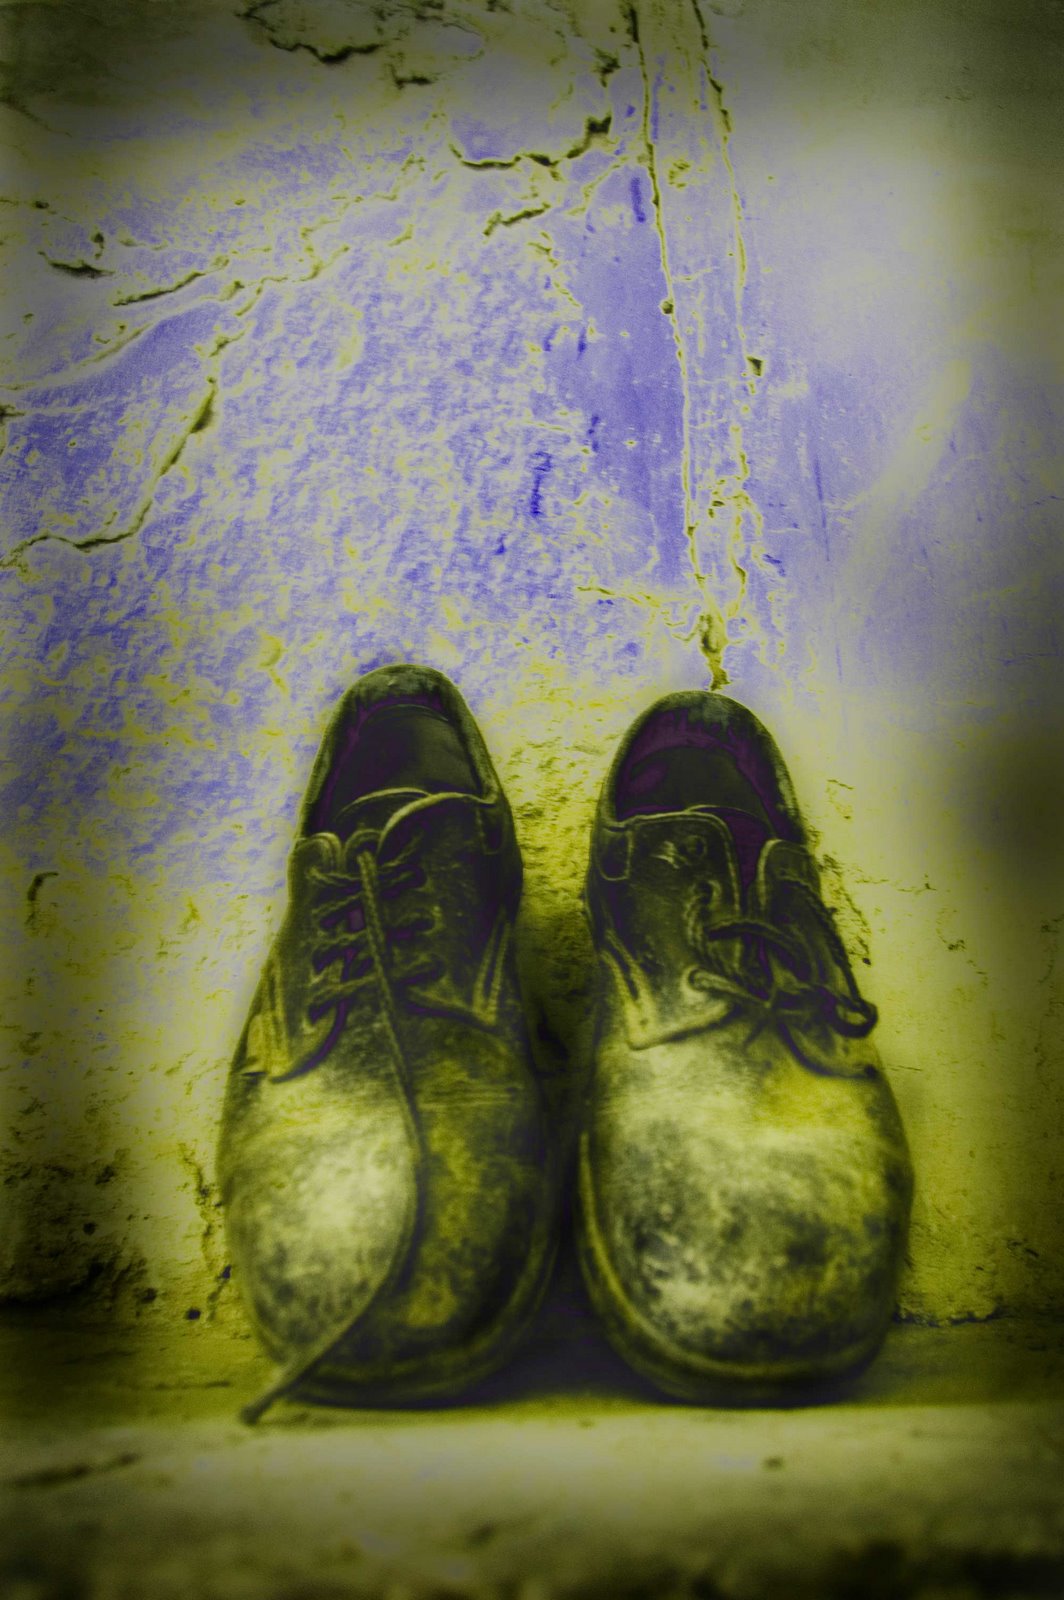 [shoes.jpg]